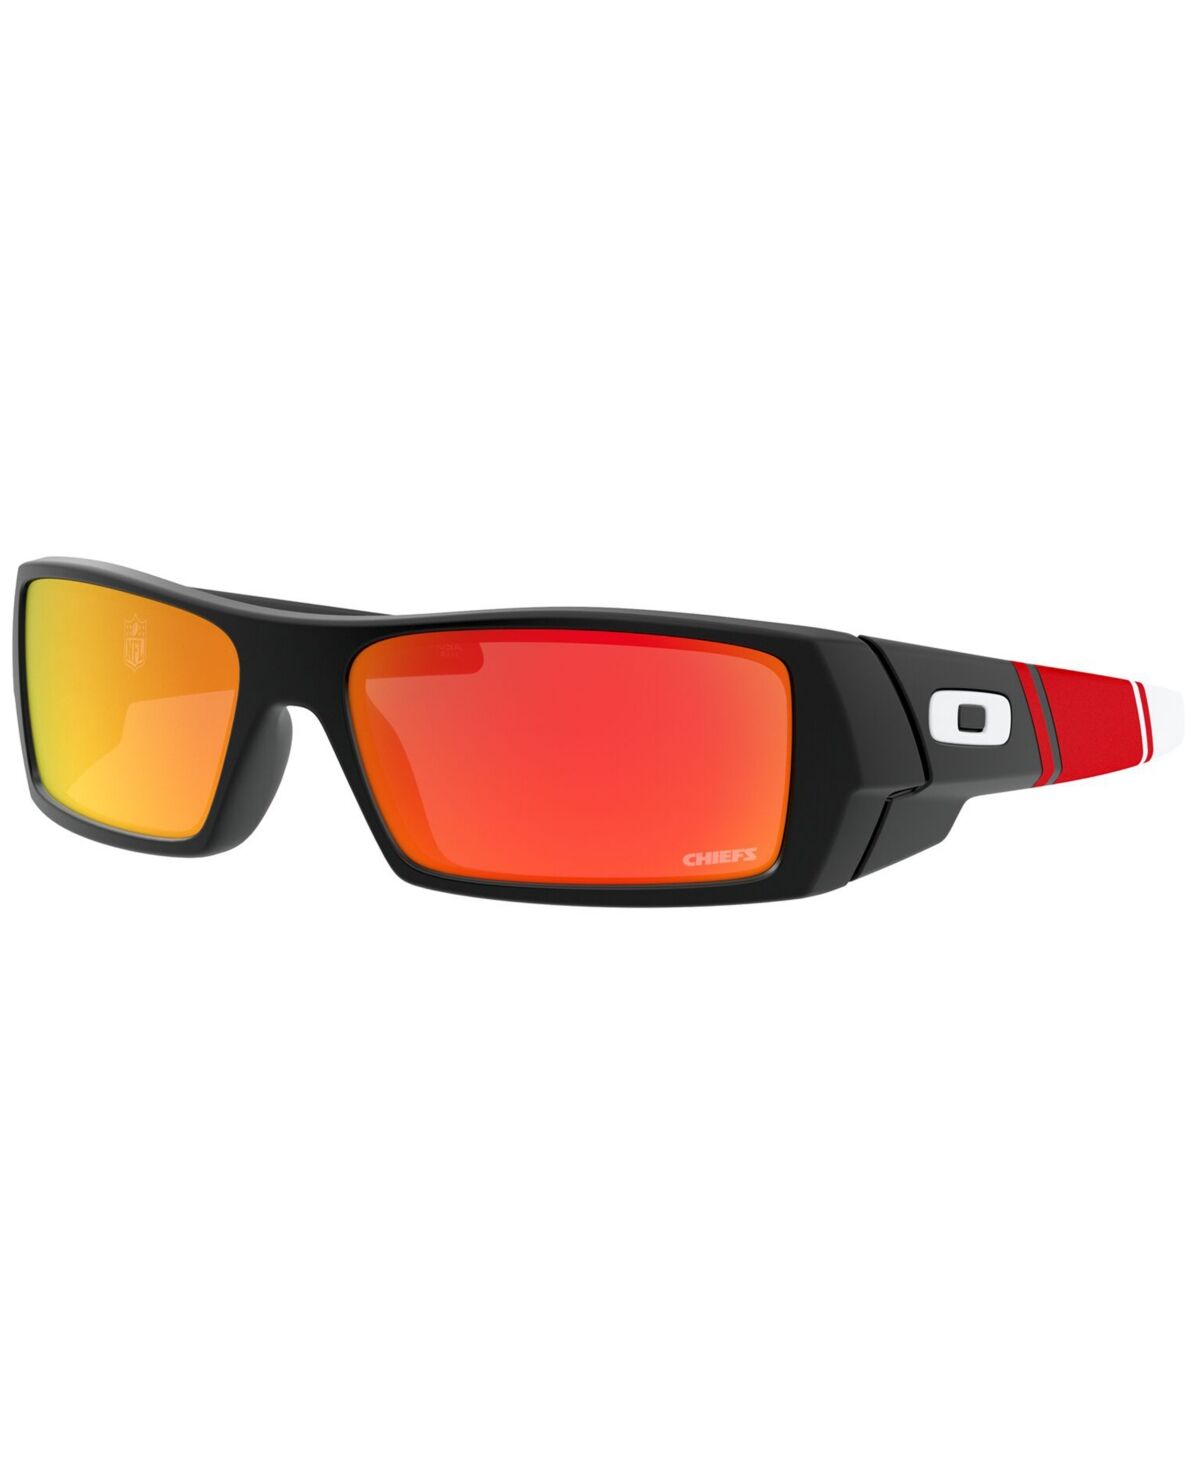 Oakley Men's Gascan Sunglasses, OO9014 - PRIZM RUBY/Chiefs